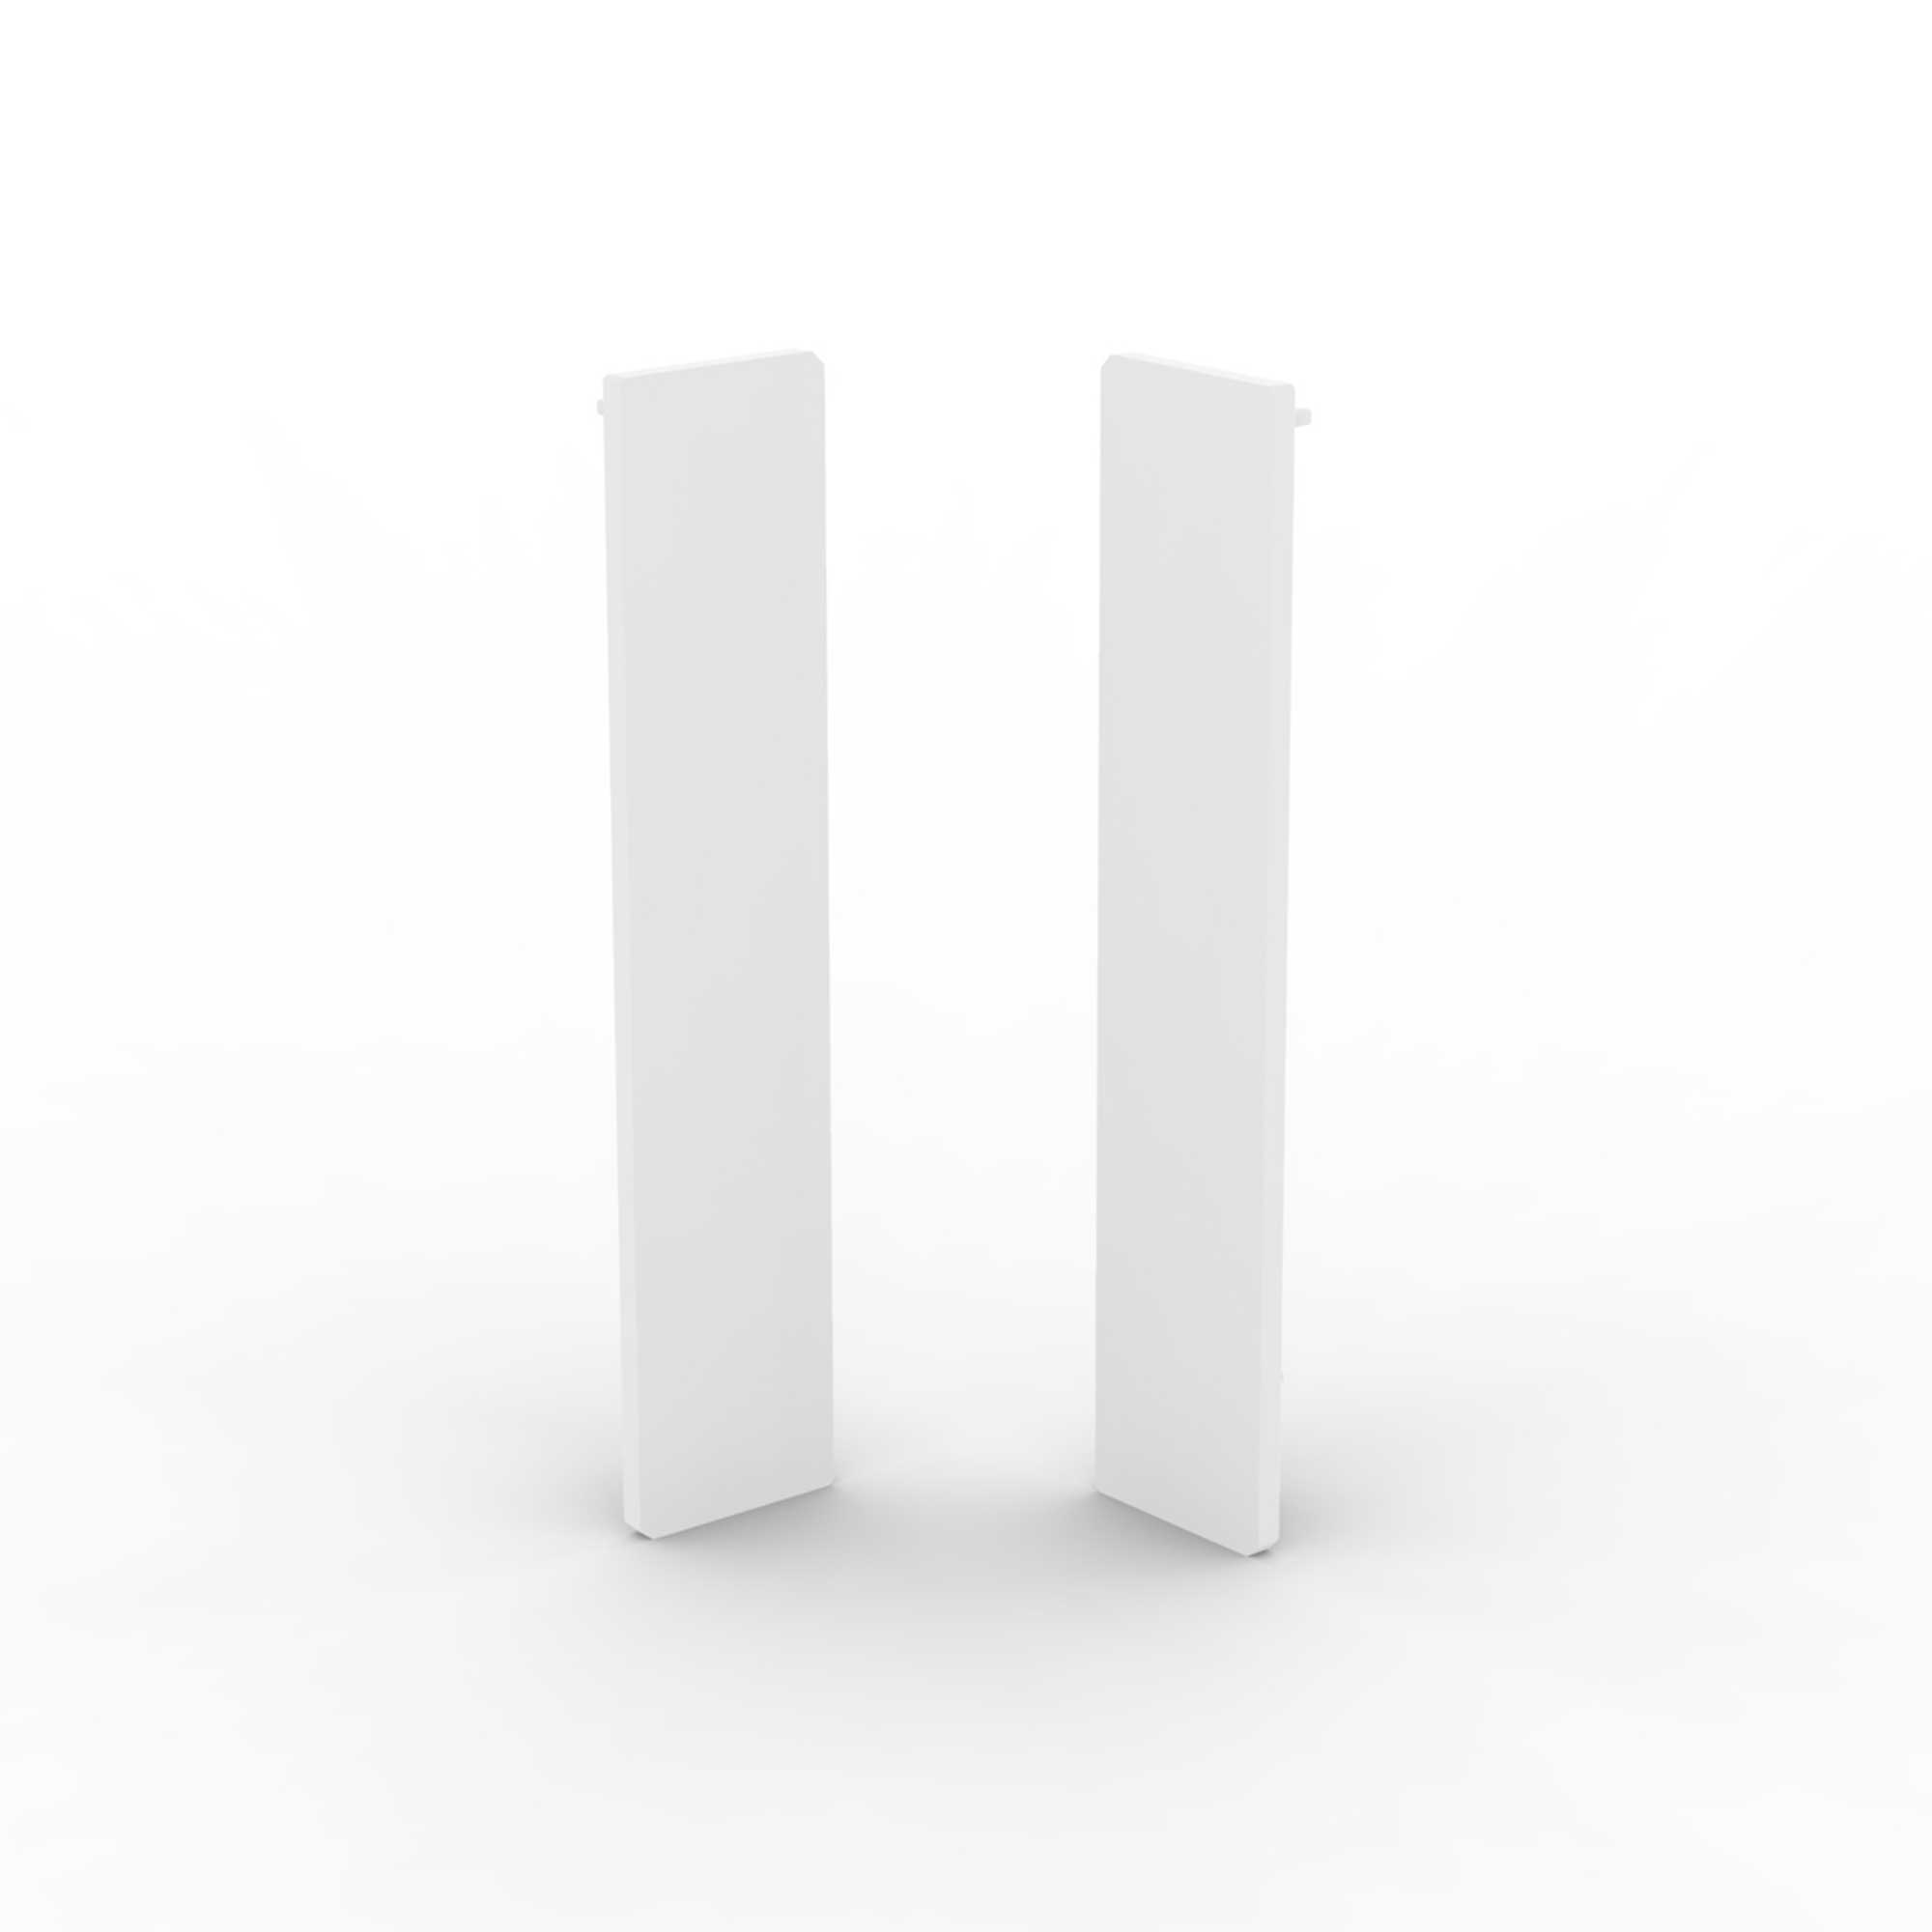 Endkappen für LED Sockelleiste 'Cubica LS 80' weiß, 2 Stück + product picture